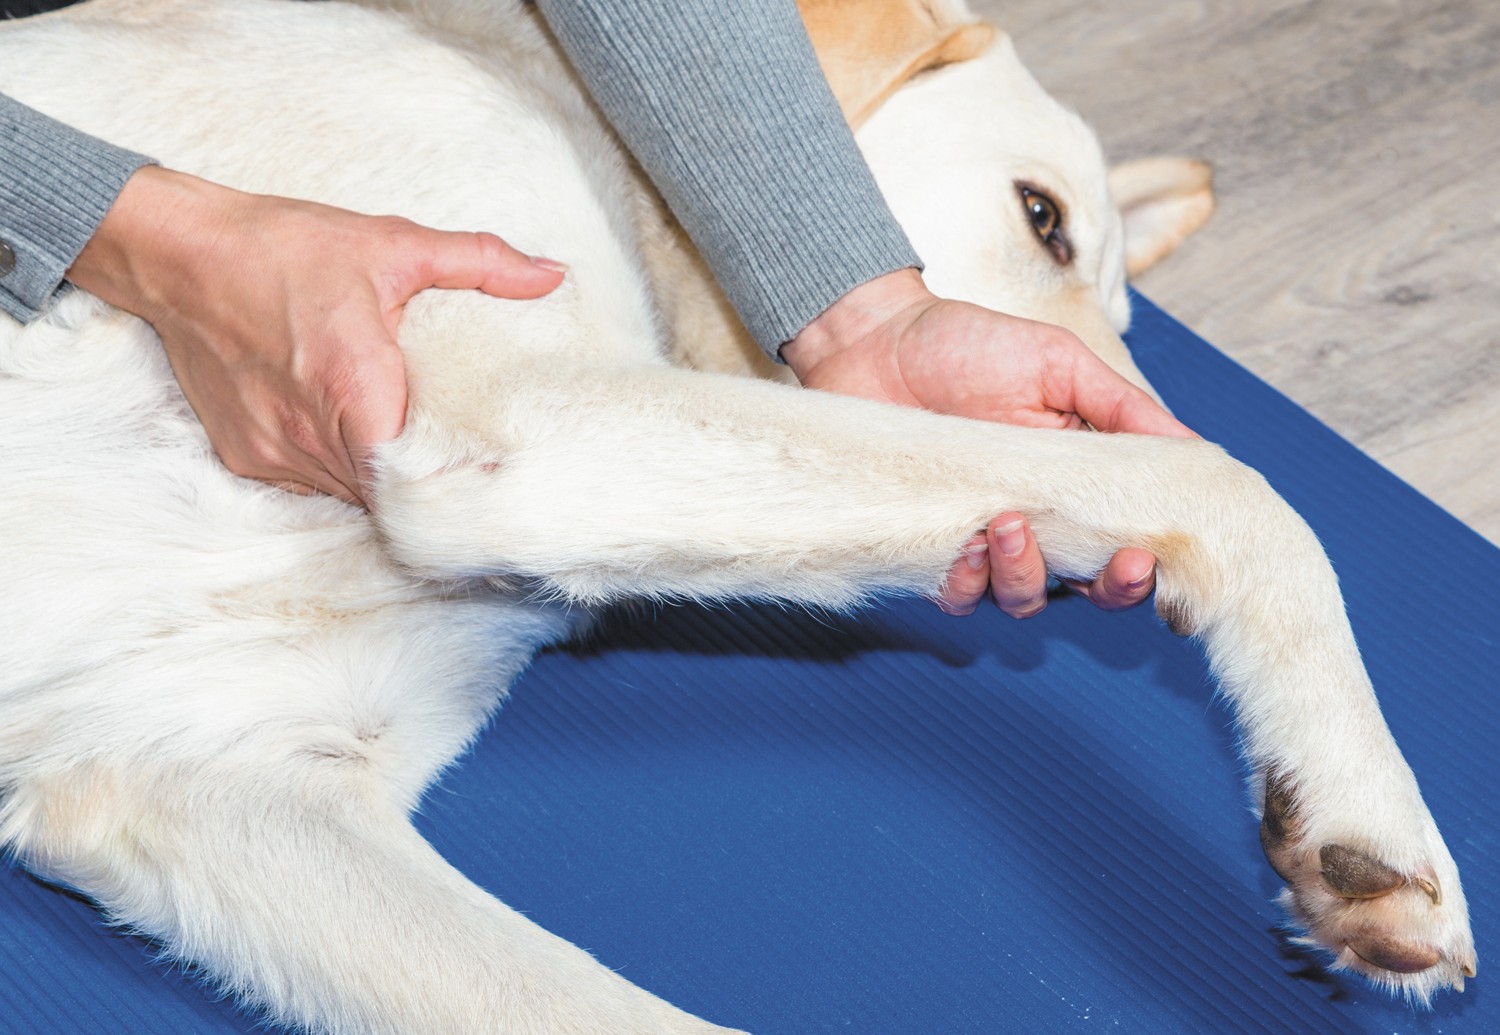 How To Tell If A Dog Has Rheumatoid Arthritis